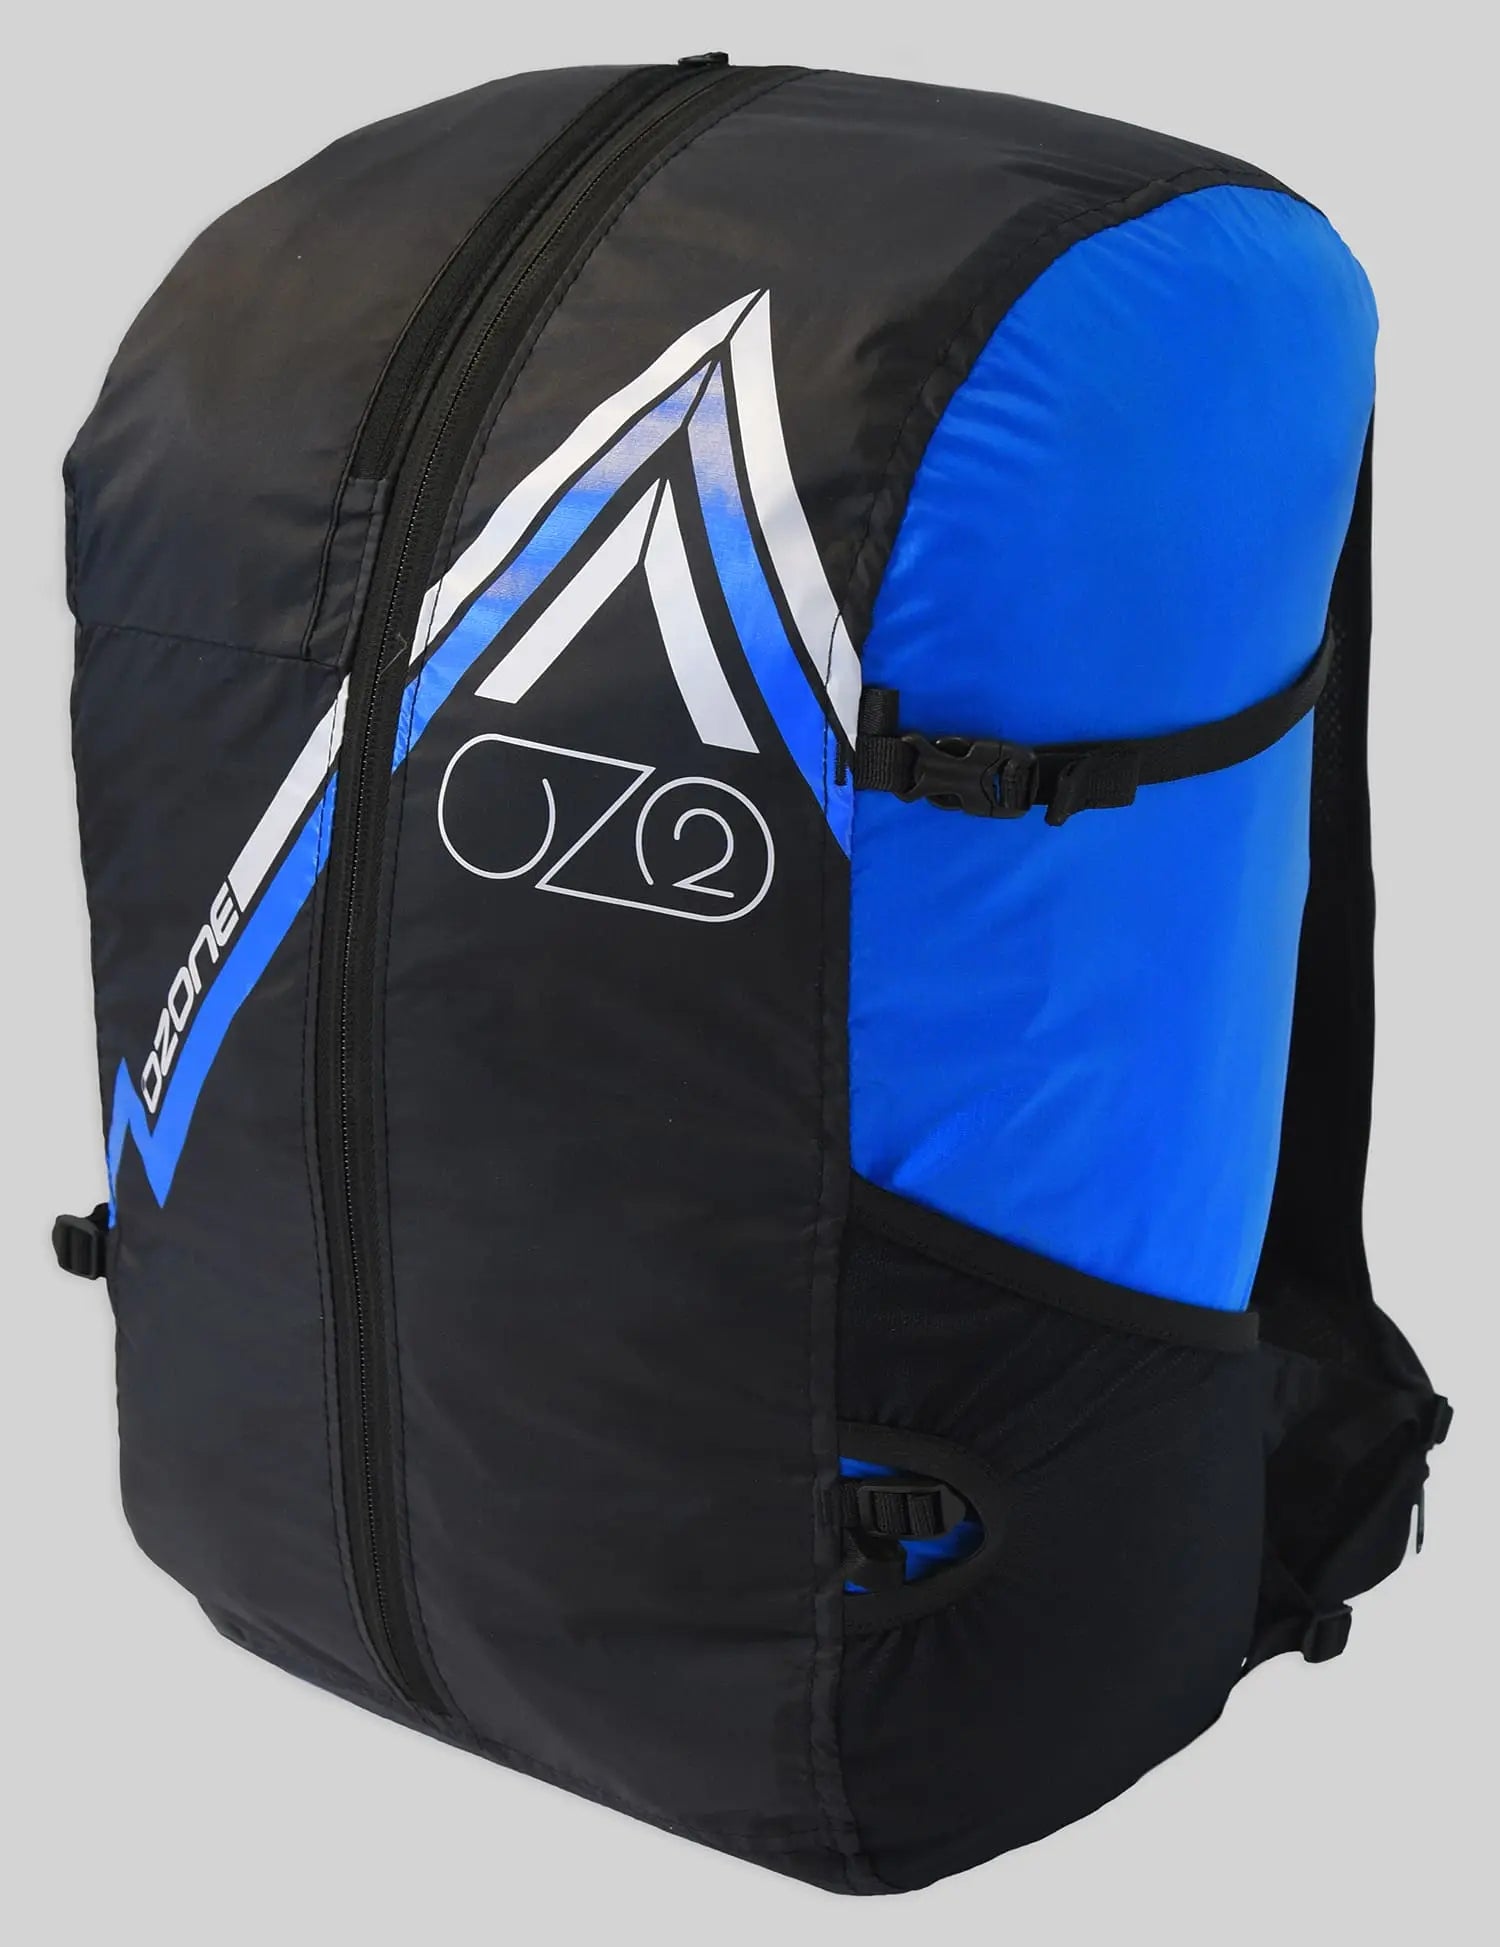 OZO 2 Ultra Light Reversible harness